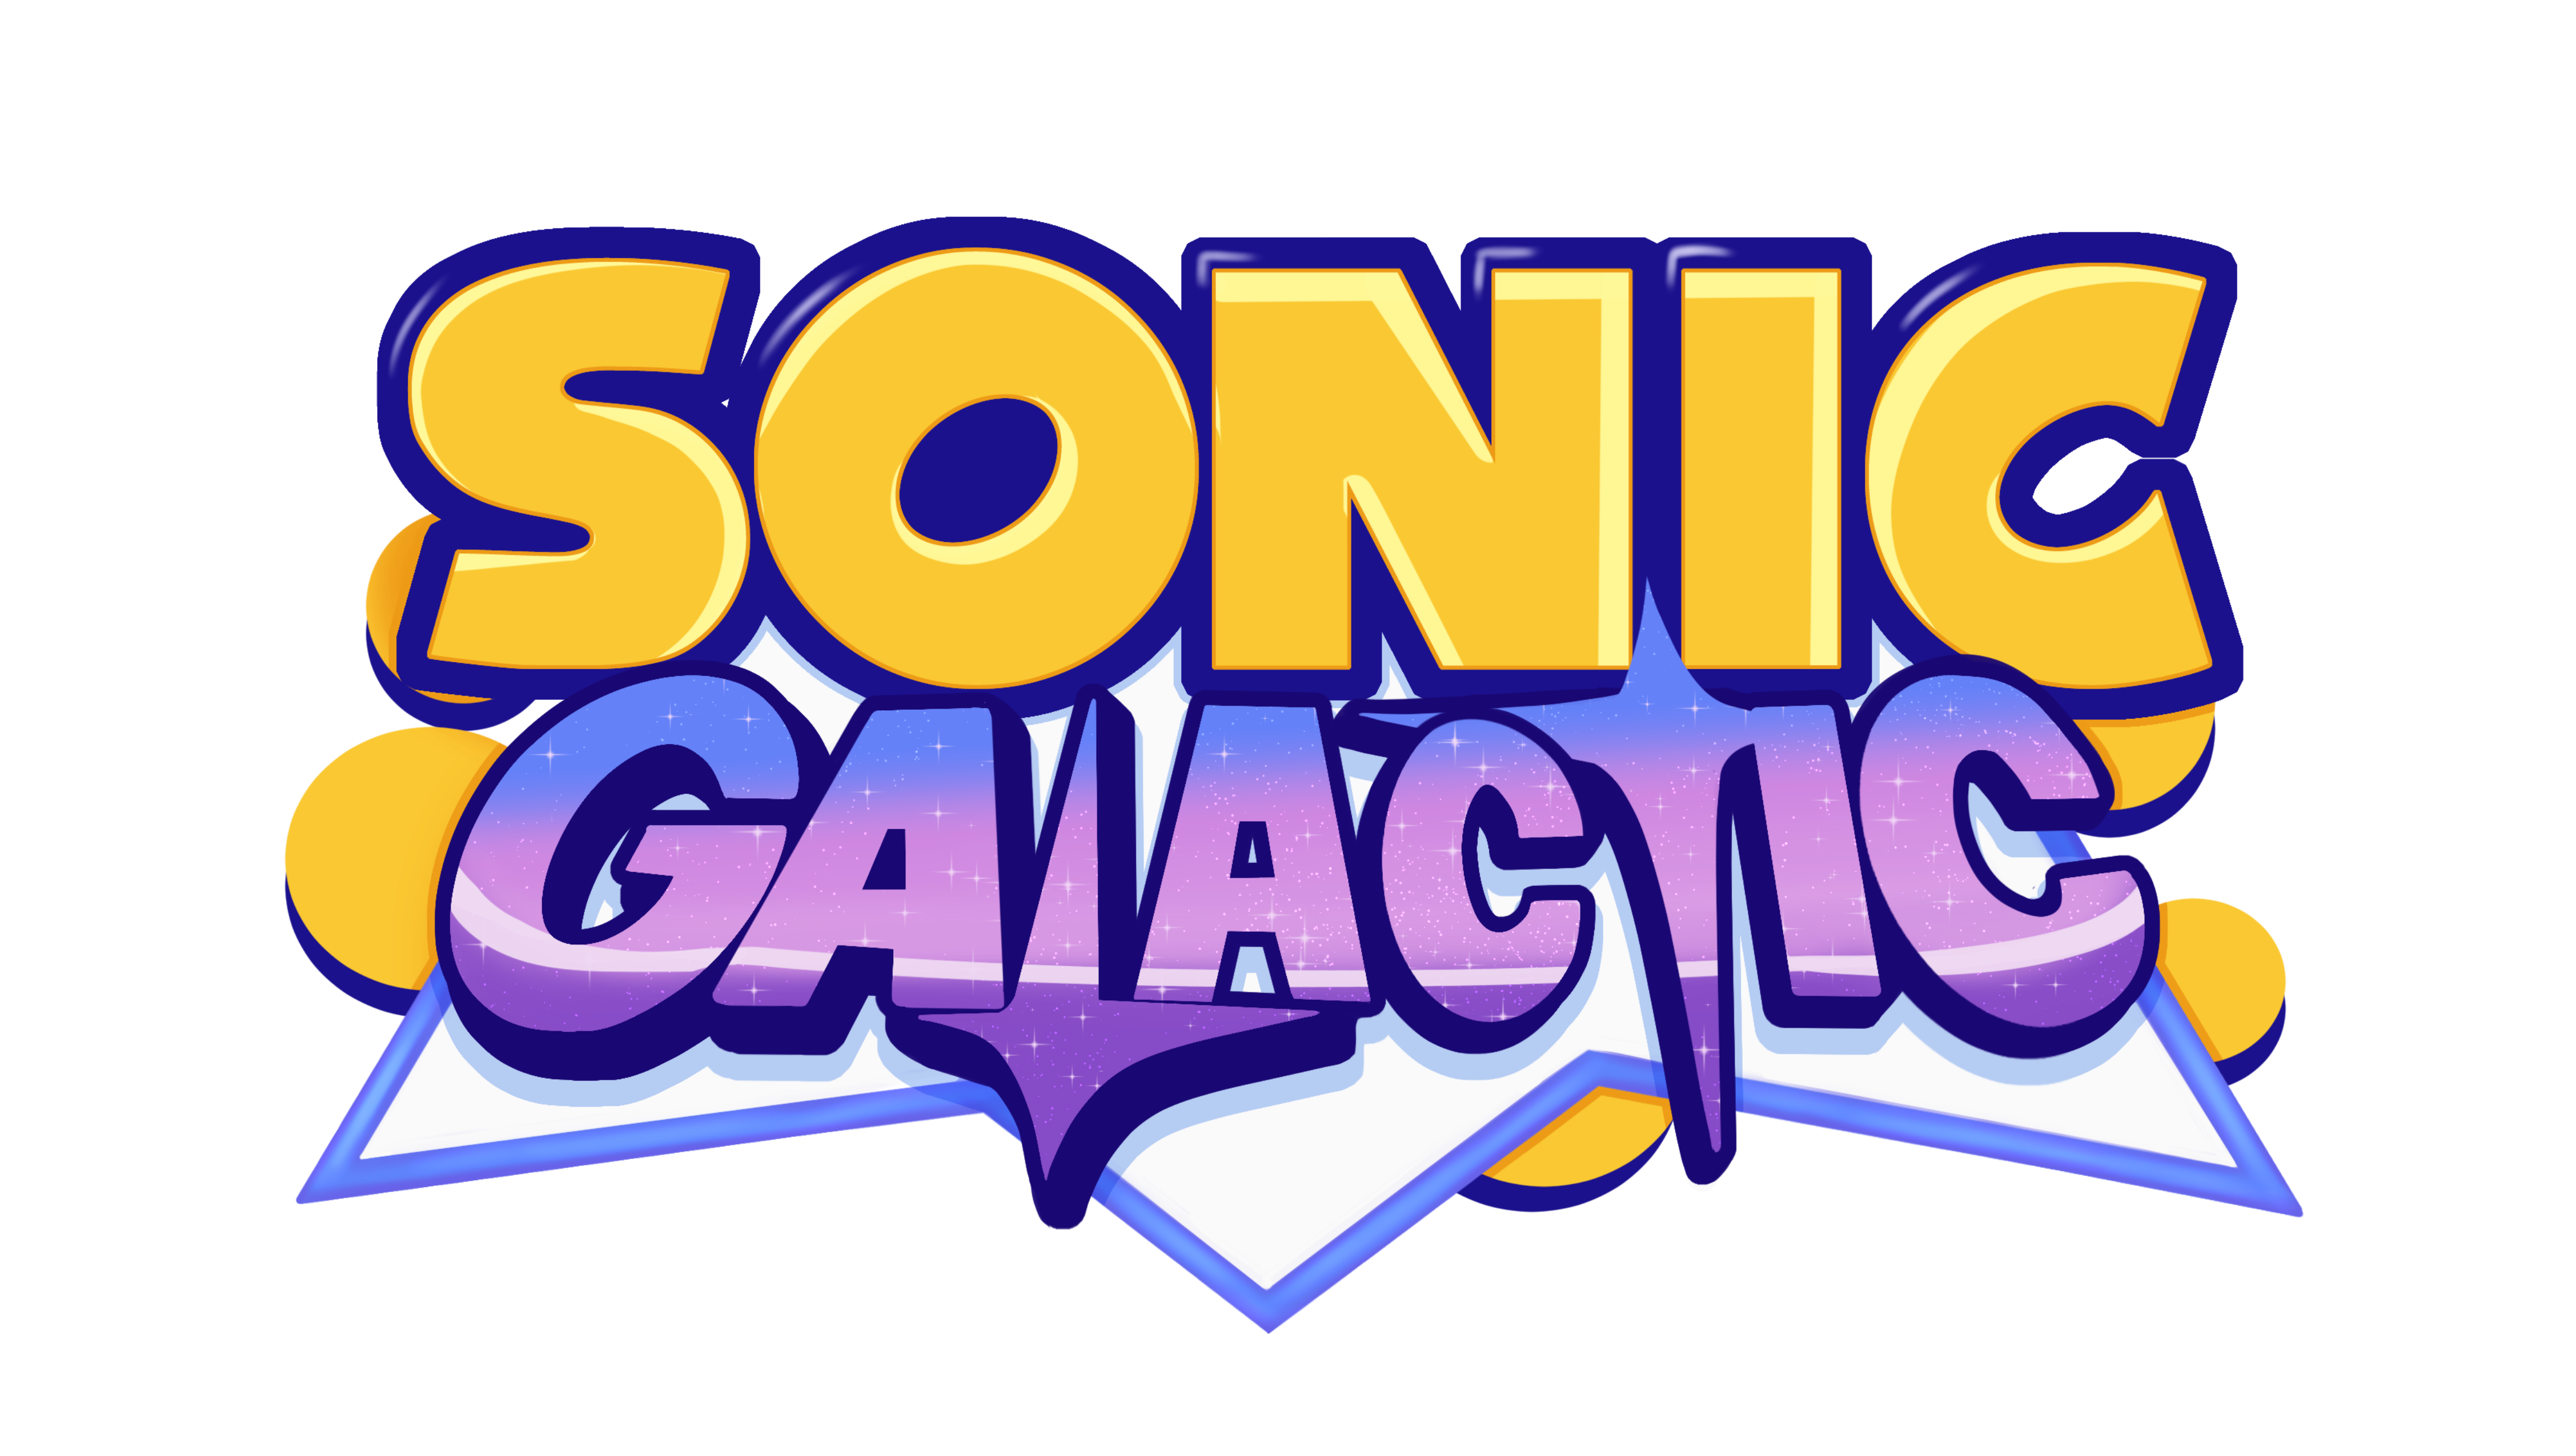 Sonic Galactic - SAGE 2020 Showcase Demo